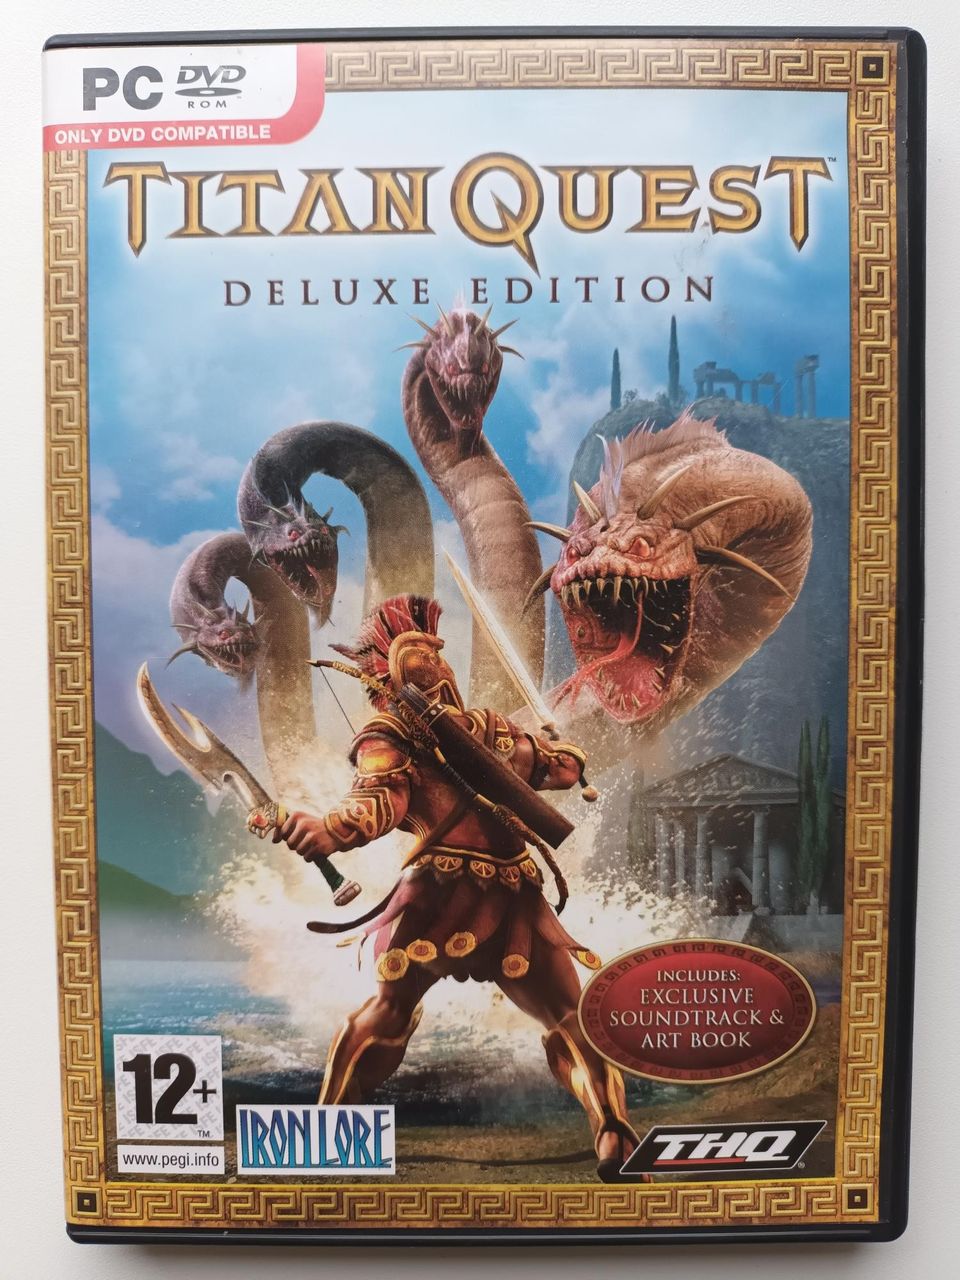 Titan Quest deluxe edition